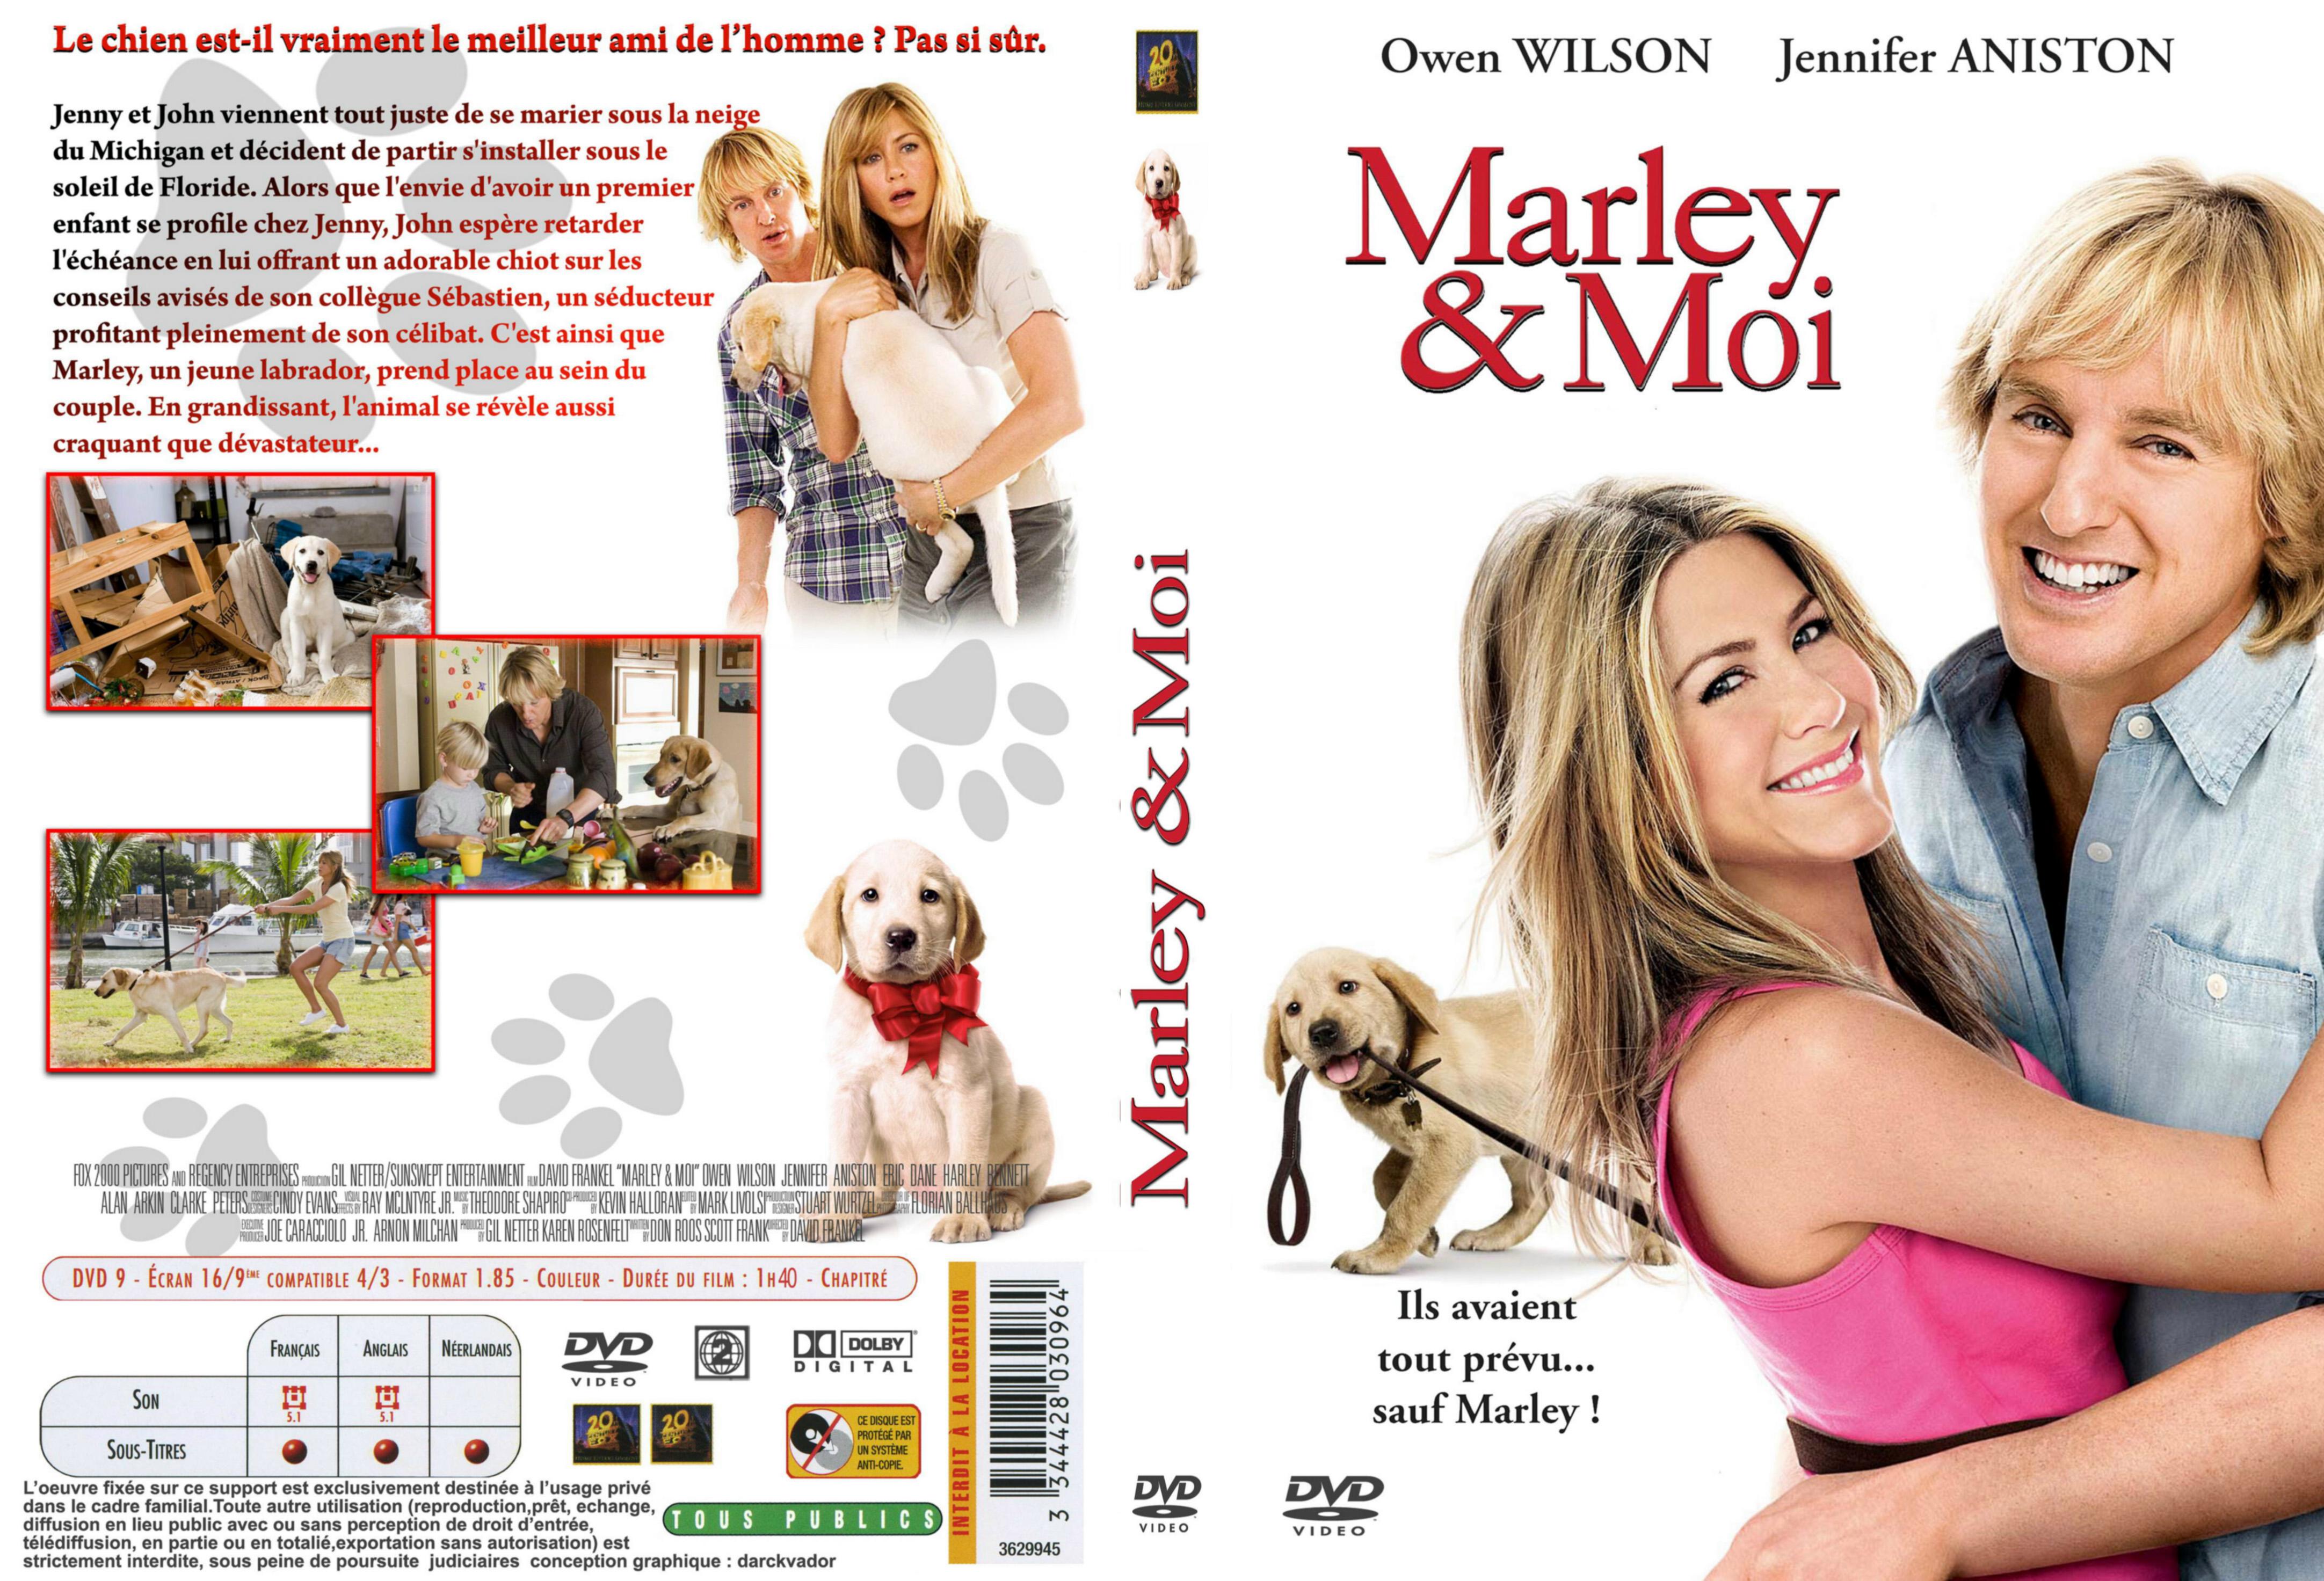 Jaquette DVD Marley et moi - SLIM